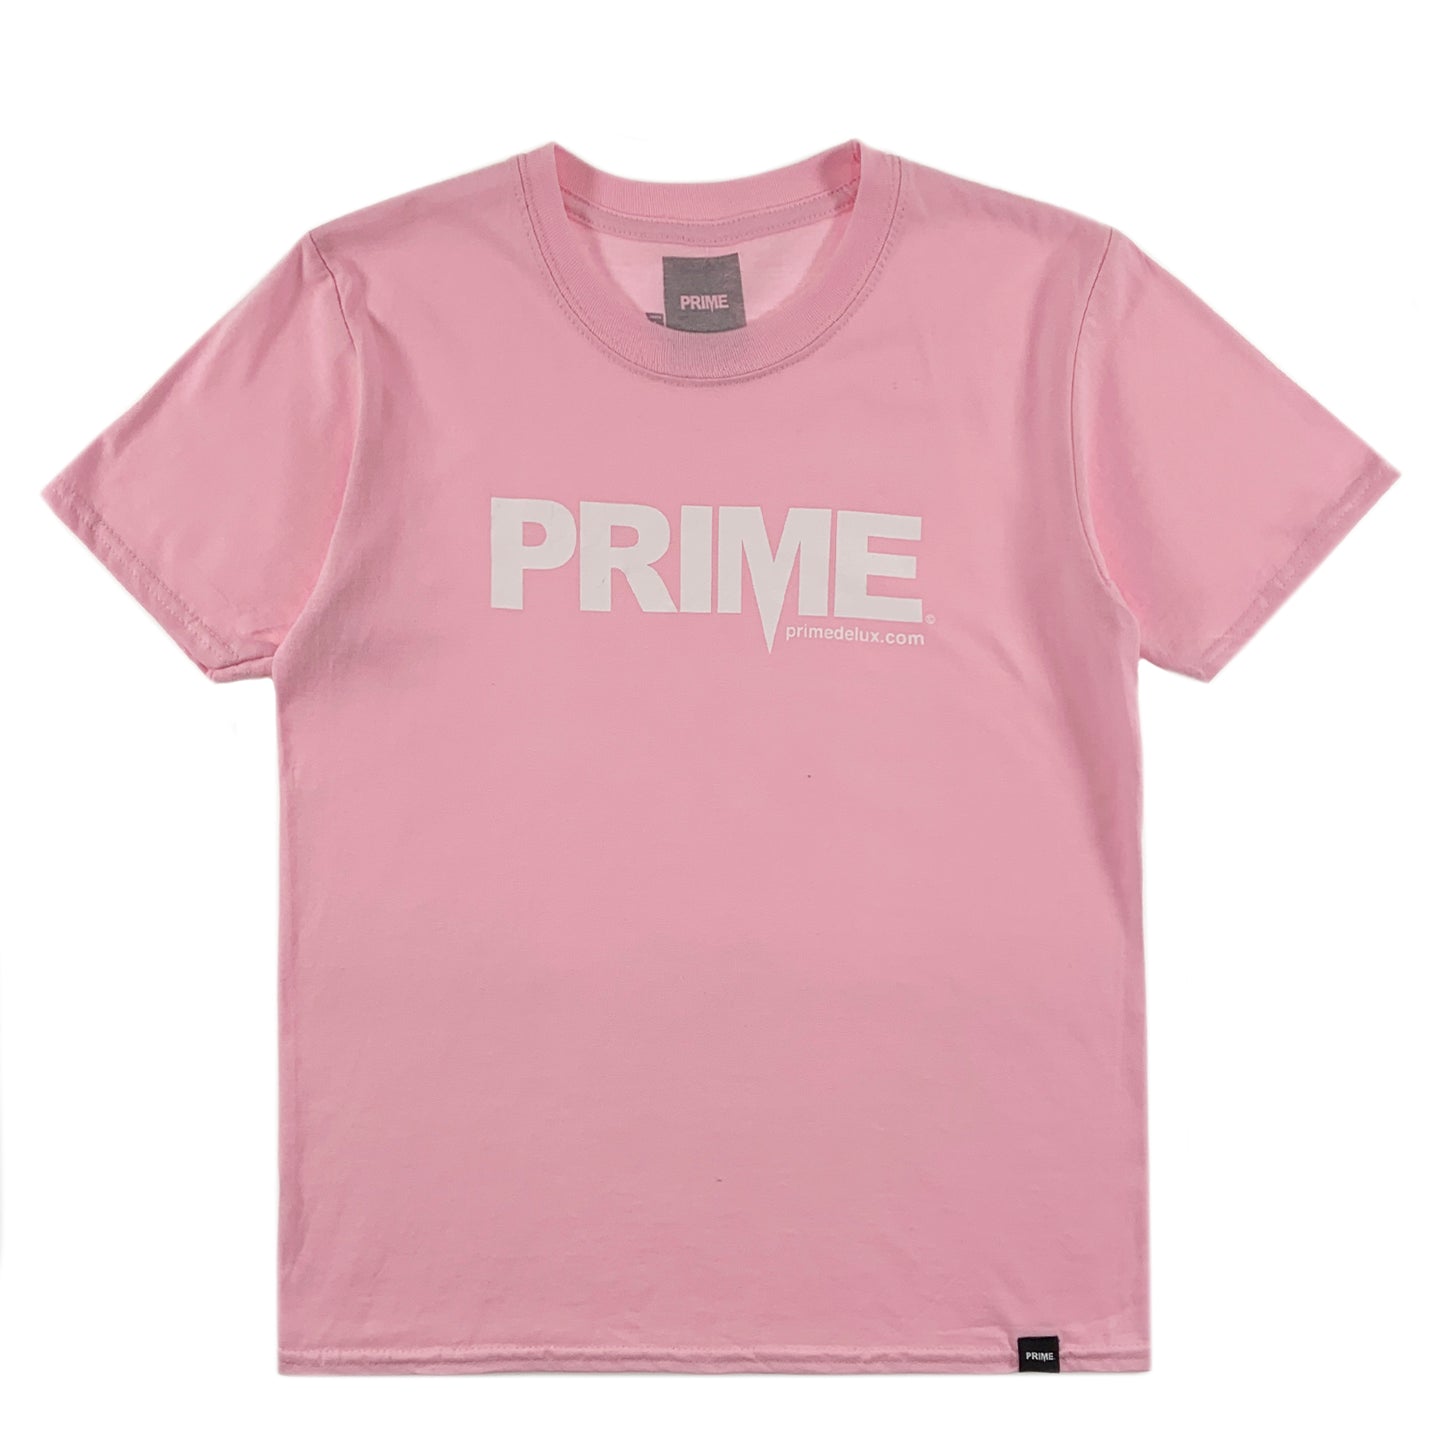 PRIME DELUX YOUTHS OG PREMIUM SHORT SLEEVE T-SHIRT - LIGHT PINK / WHITE - Prime Delux Store